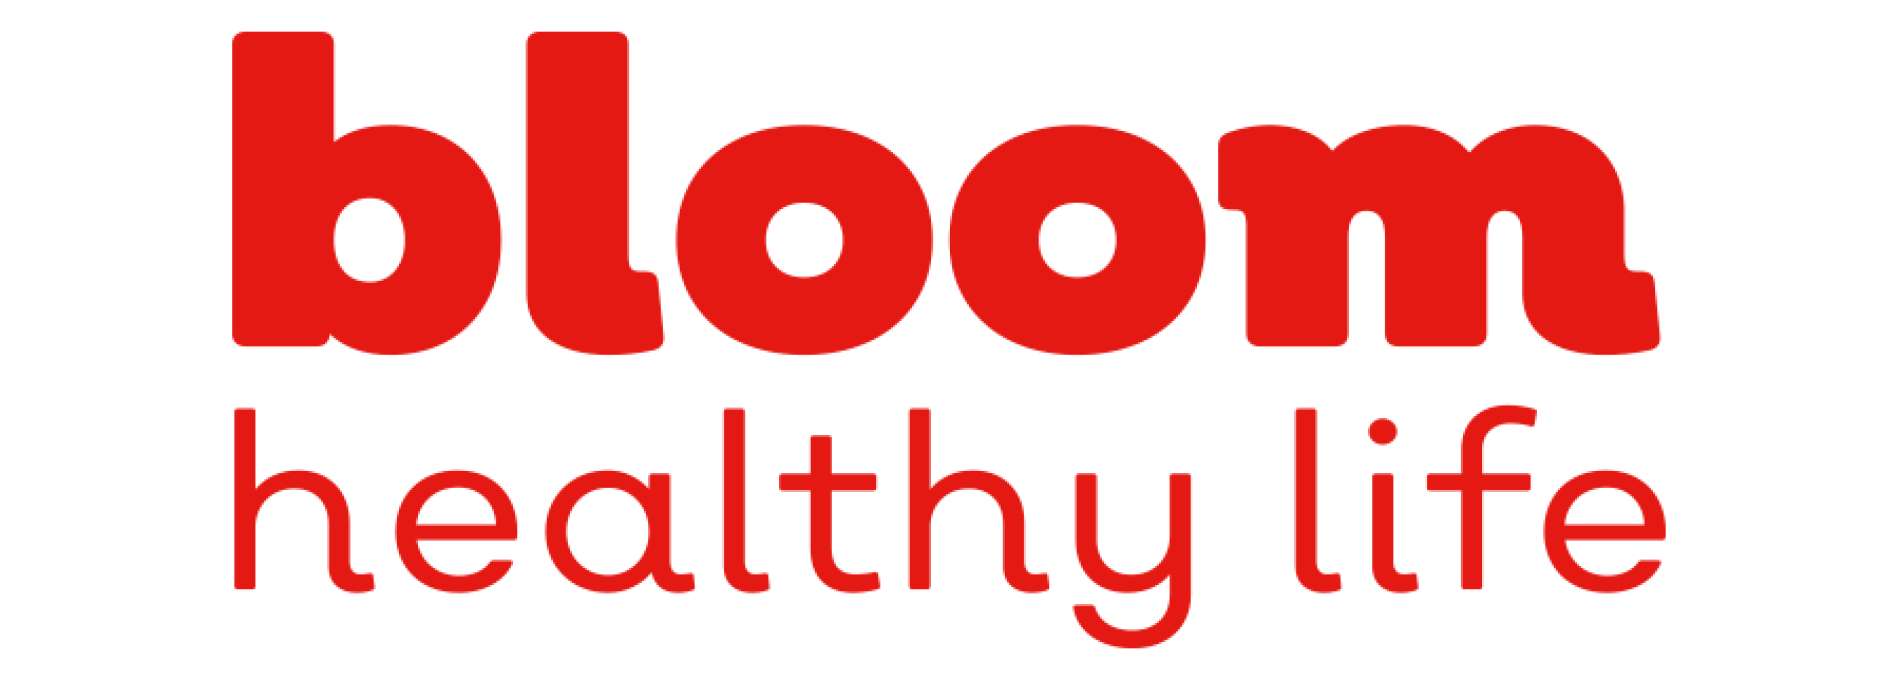 Bloom Healthy Life - VVV Ameland